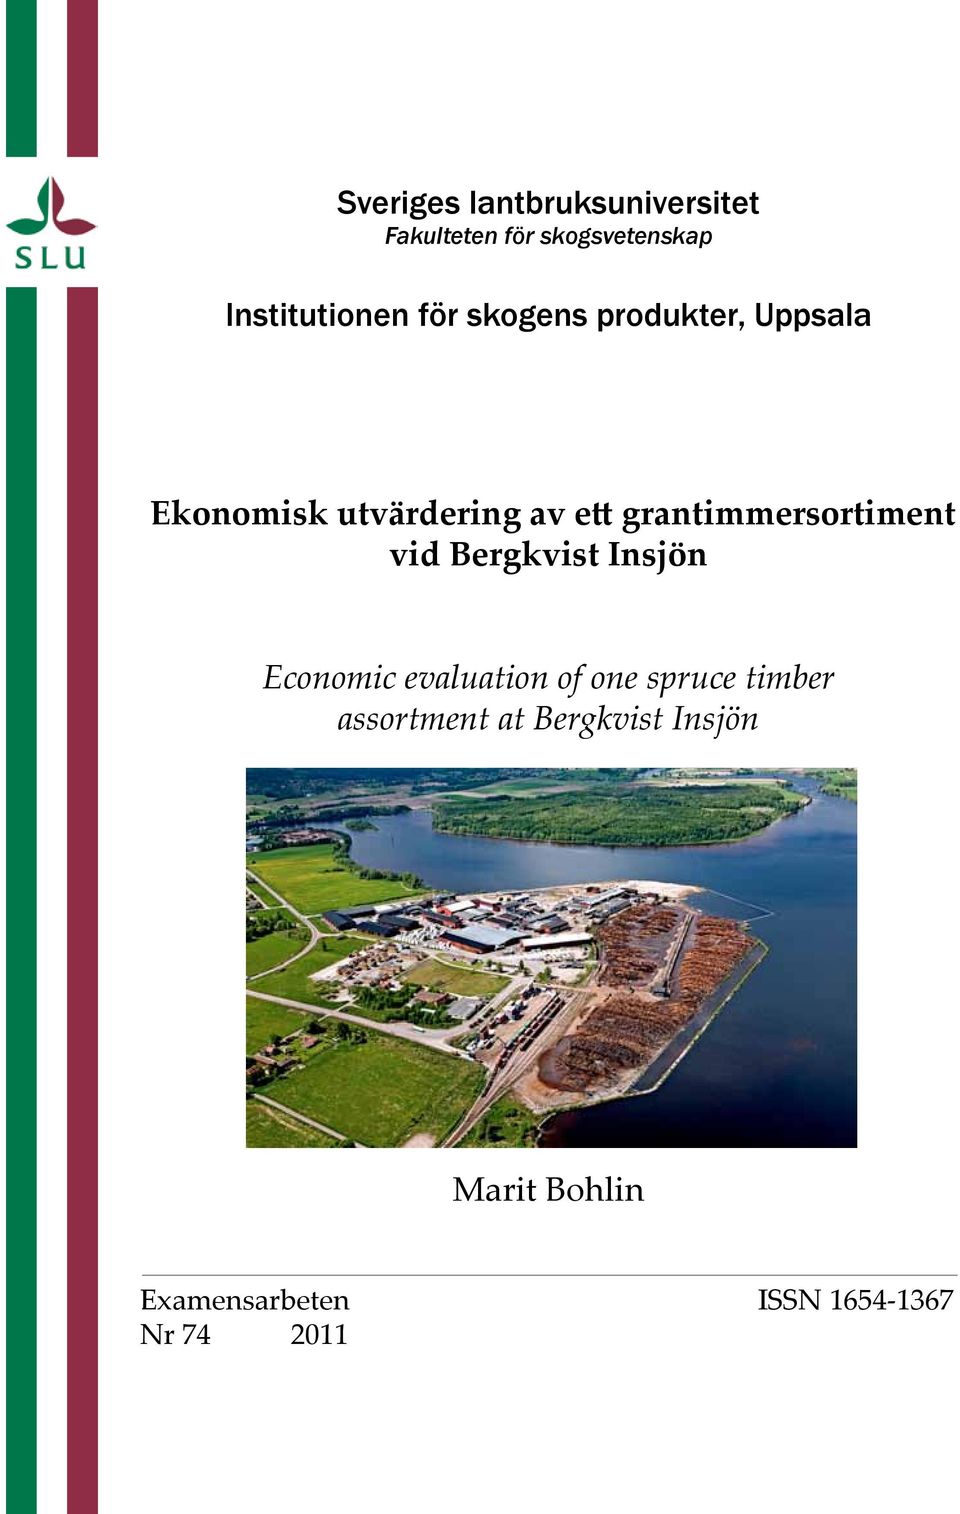 grantimmersortiment vid Bergkvist Insjön Economic evaluation of one spruce